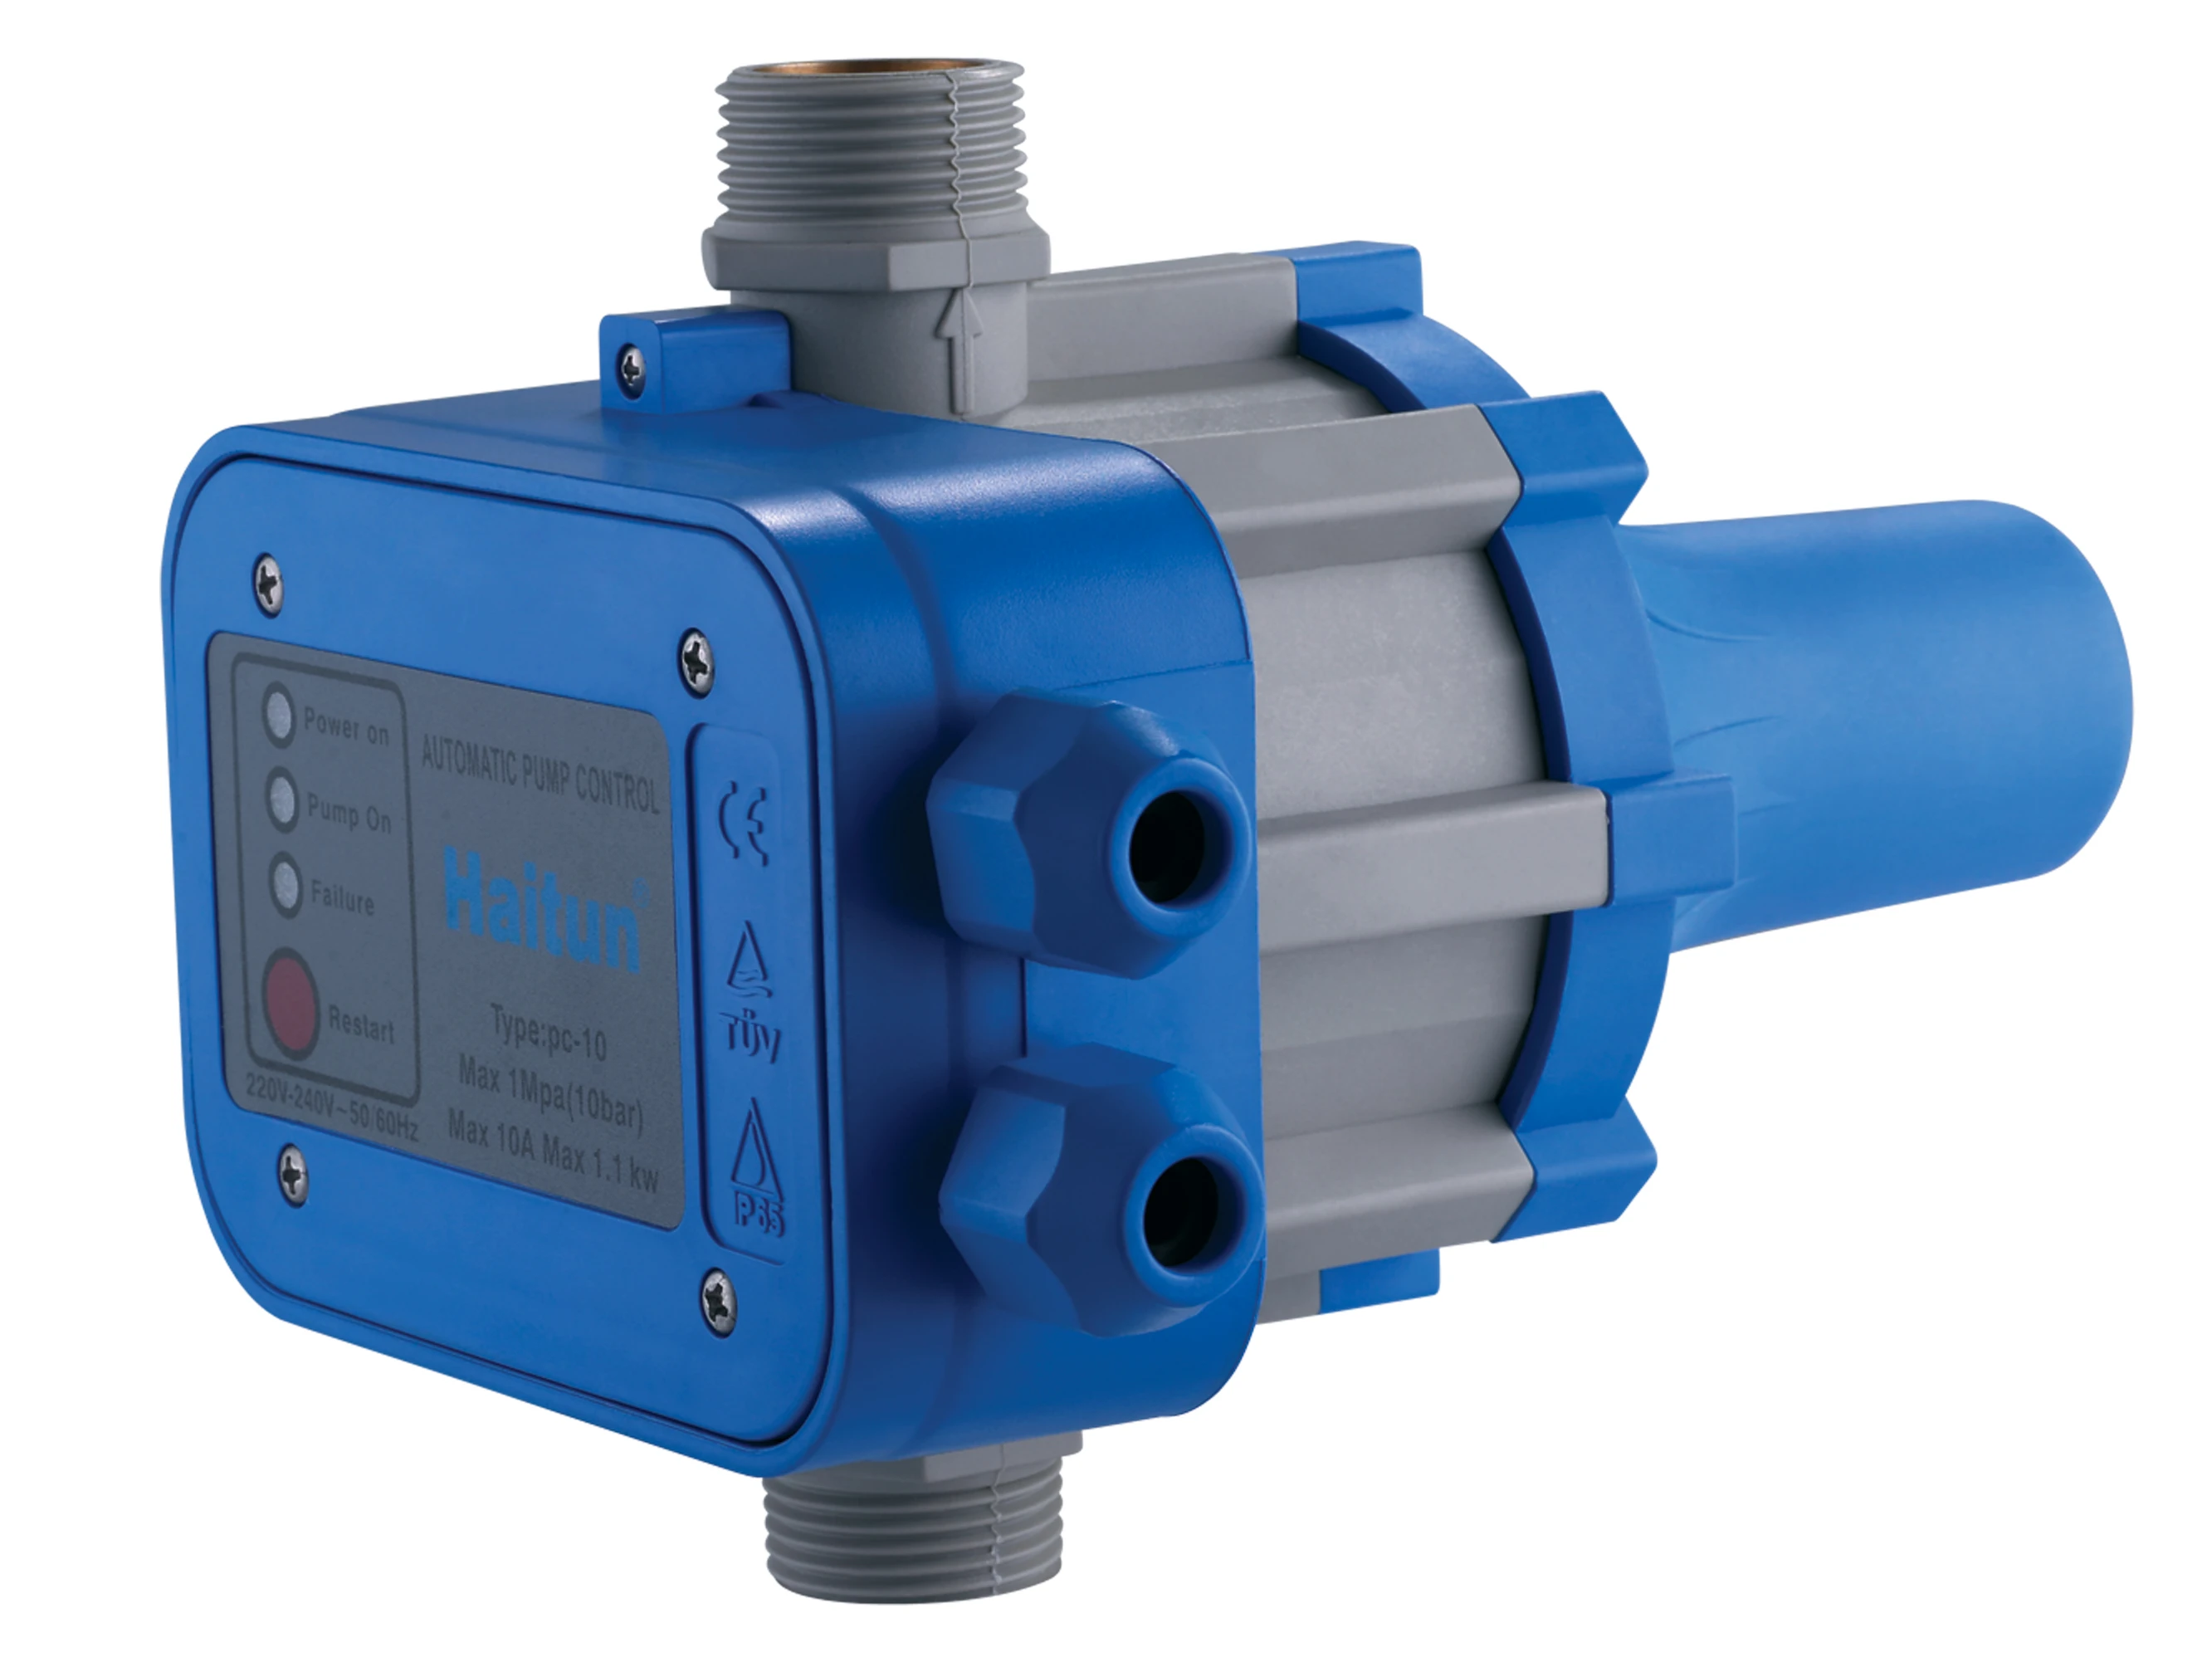 Pressure control of Automatic pump control of PC-10